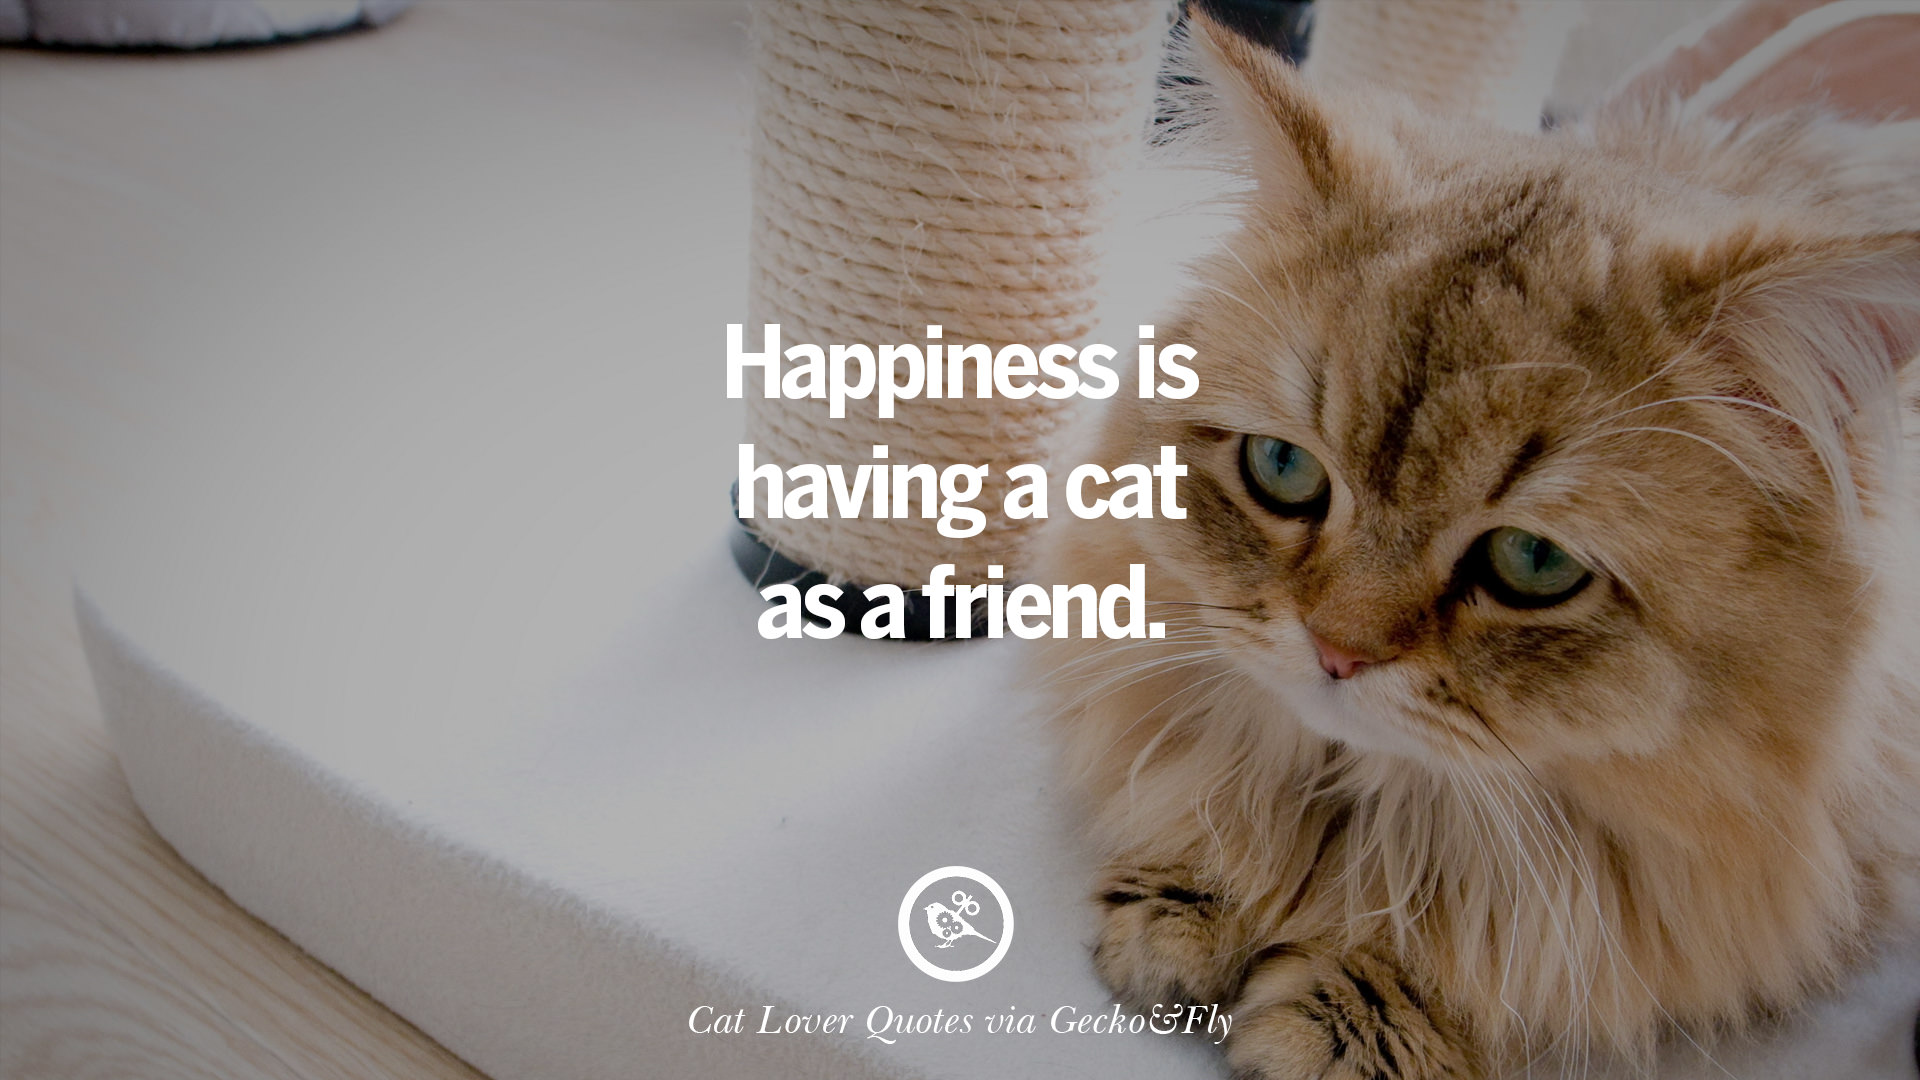 25 Cute Cat Images With Quotes For Crazy Cat Ladies ...